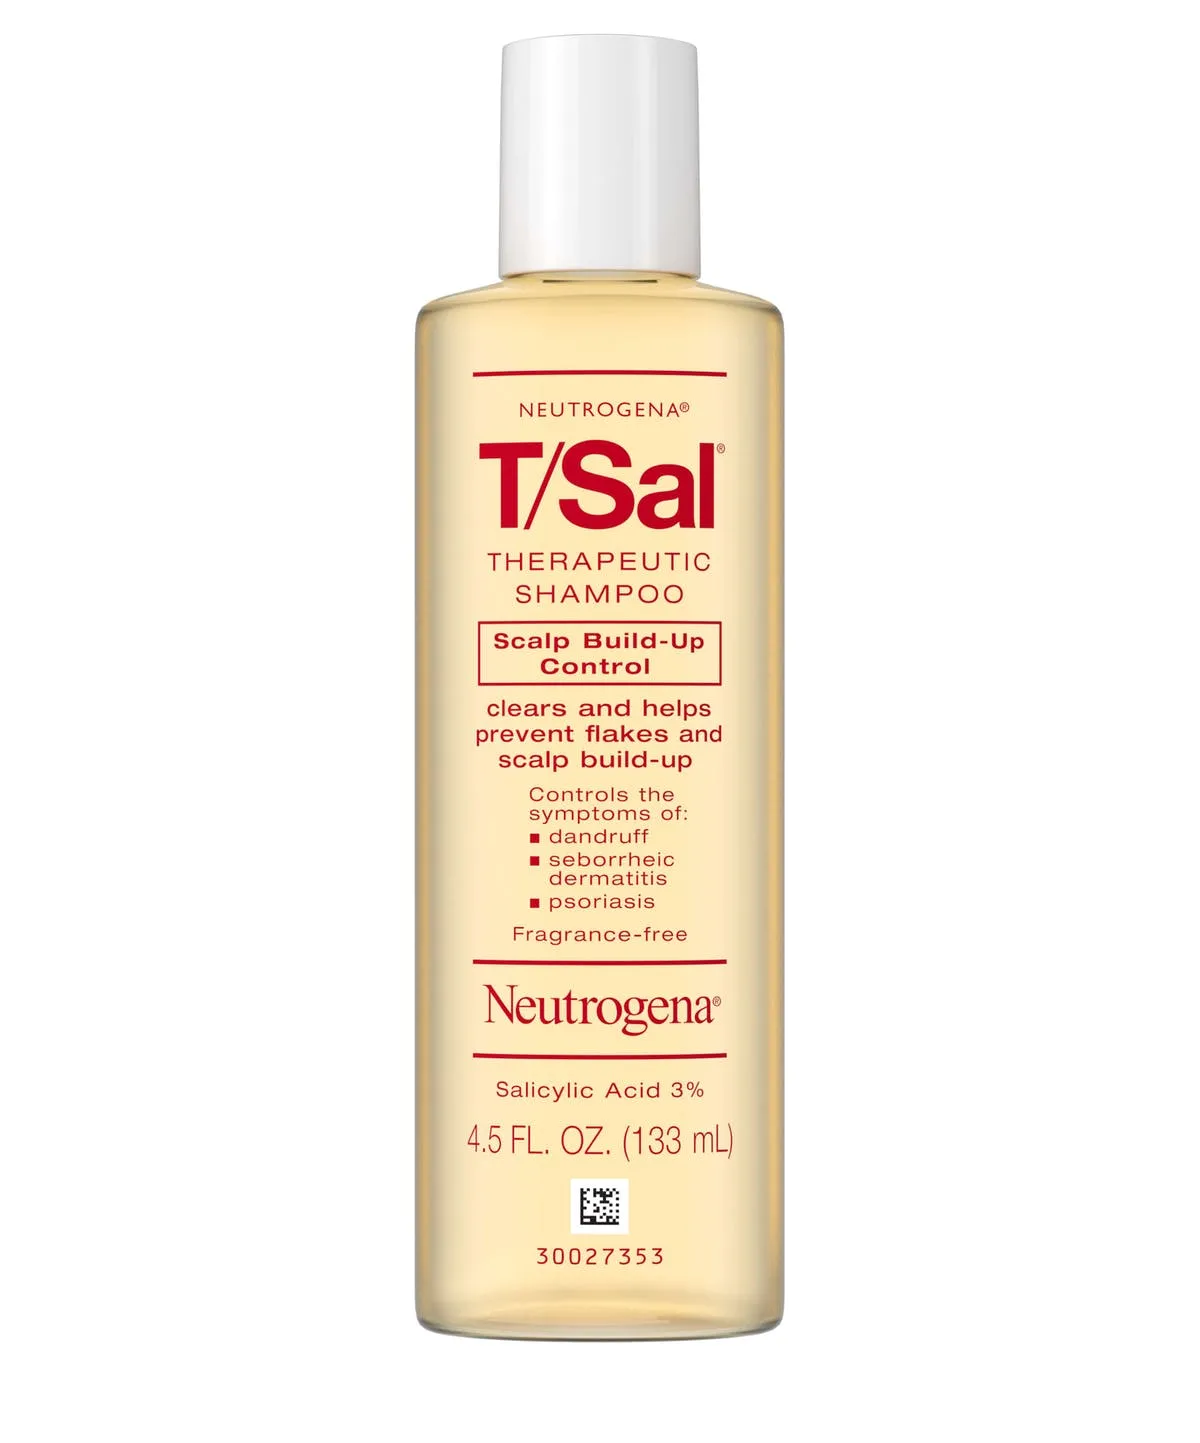 FEMMENORDIC's choice in the T/Sal vs T/Gel comparison, the Neutrogena T/Sal Therapeutic Shampoo